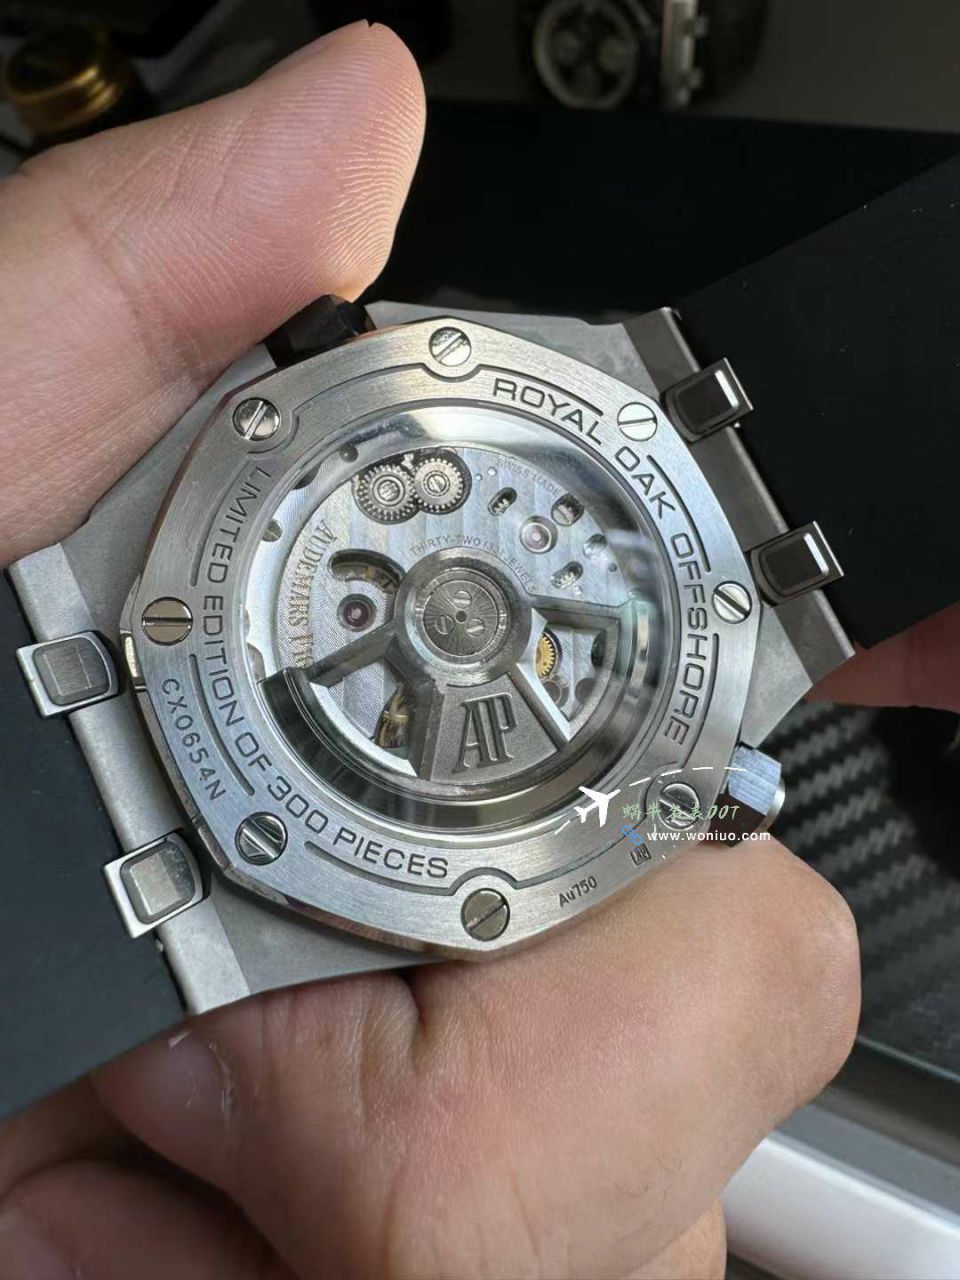 APS厂爱彼皇家橡树离岸型最好的复刻高仿手表15720CN.OO.A002CA.01腕表 / AP281